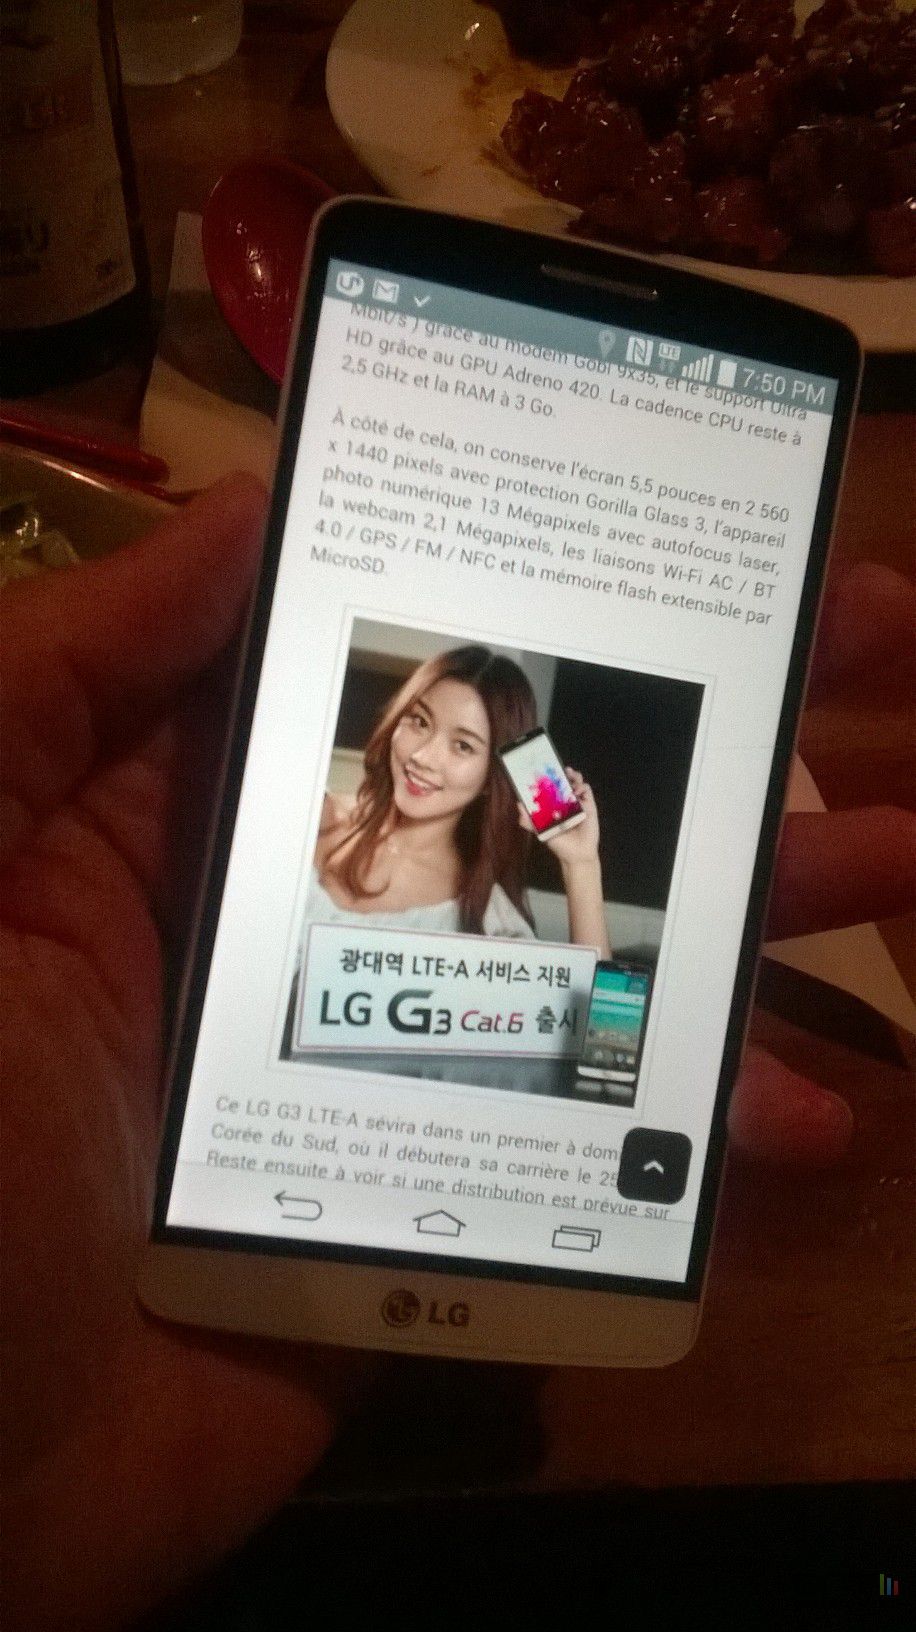 LG G3 LTE-A (4)